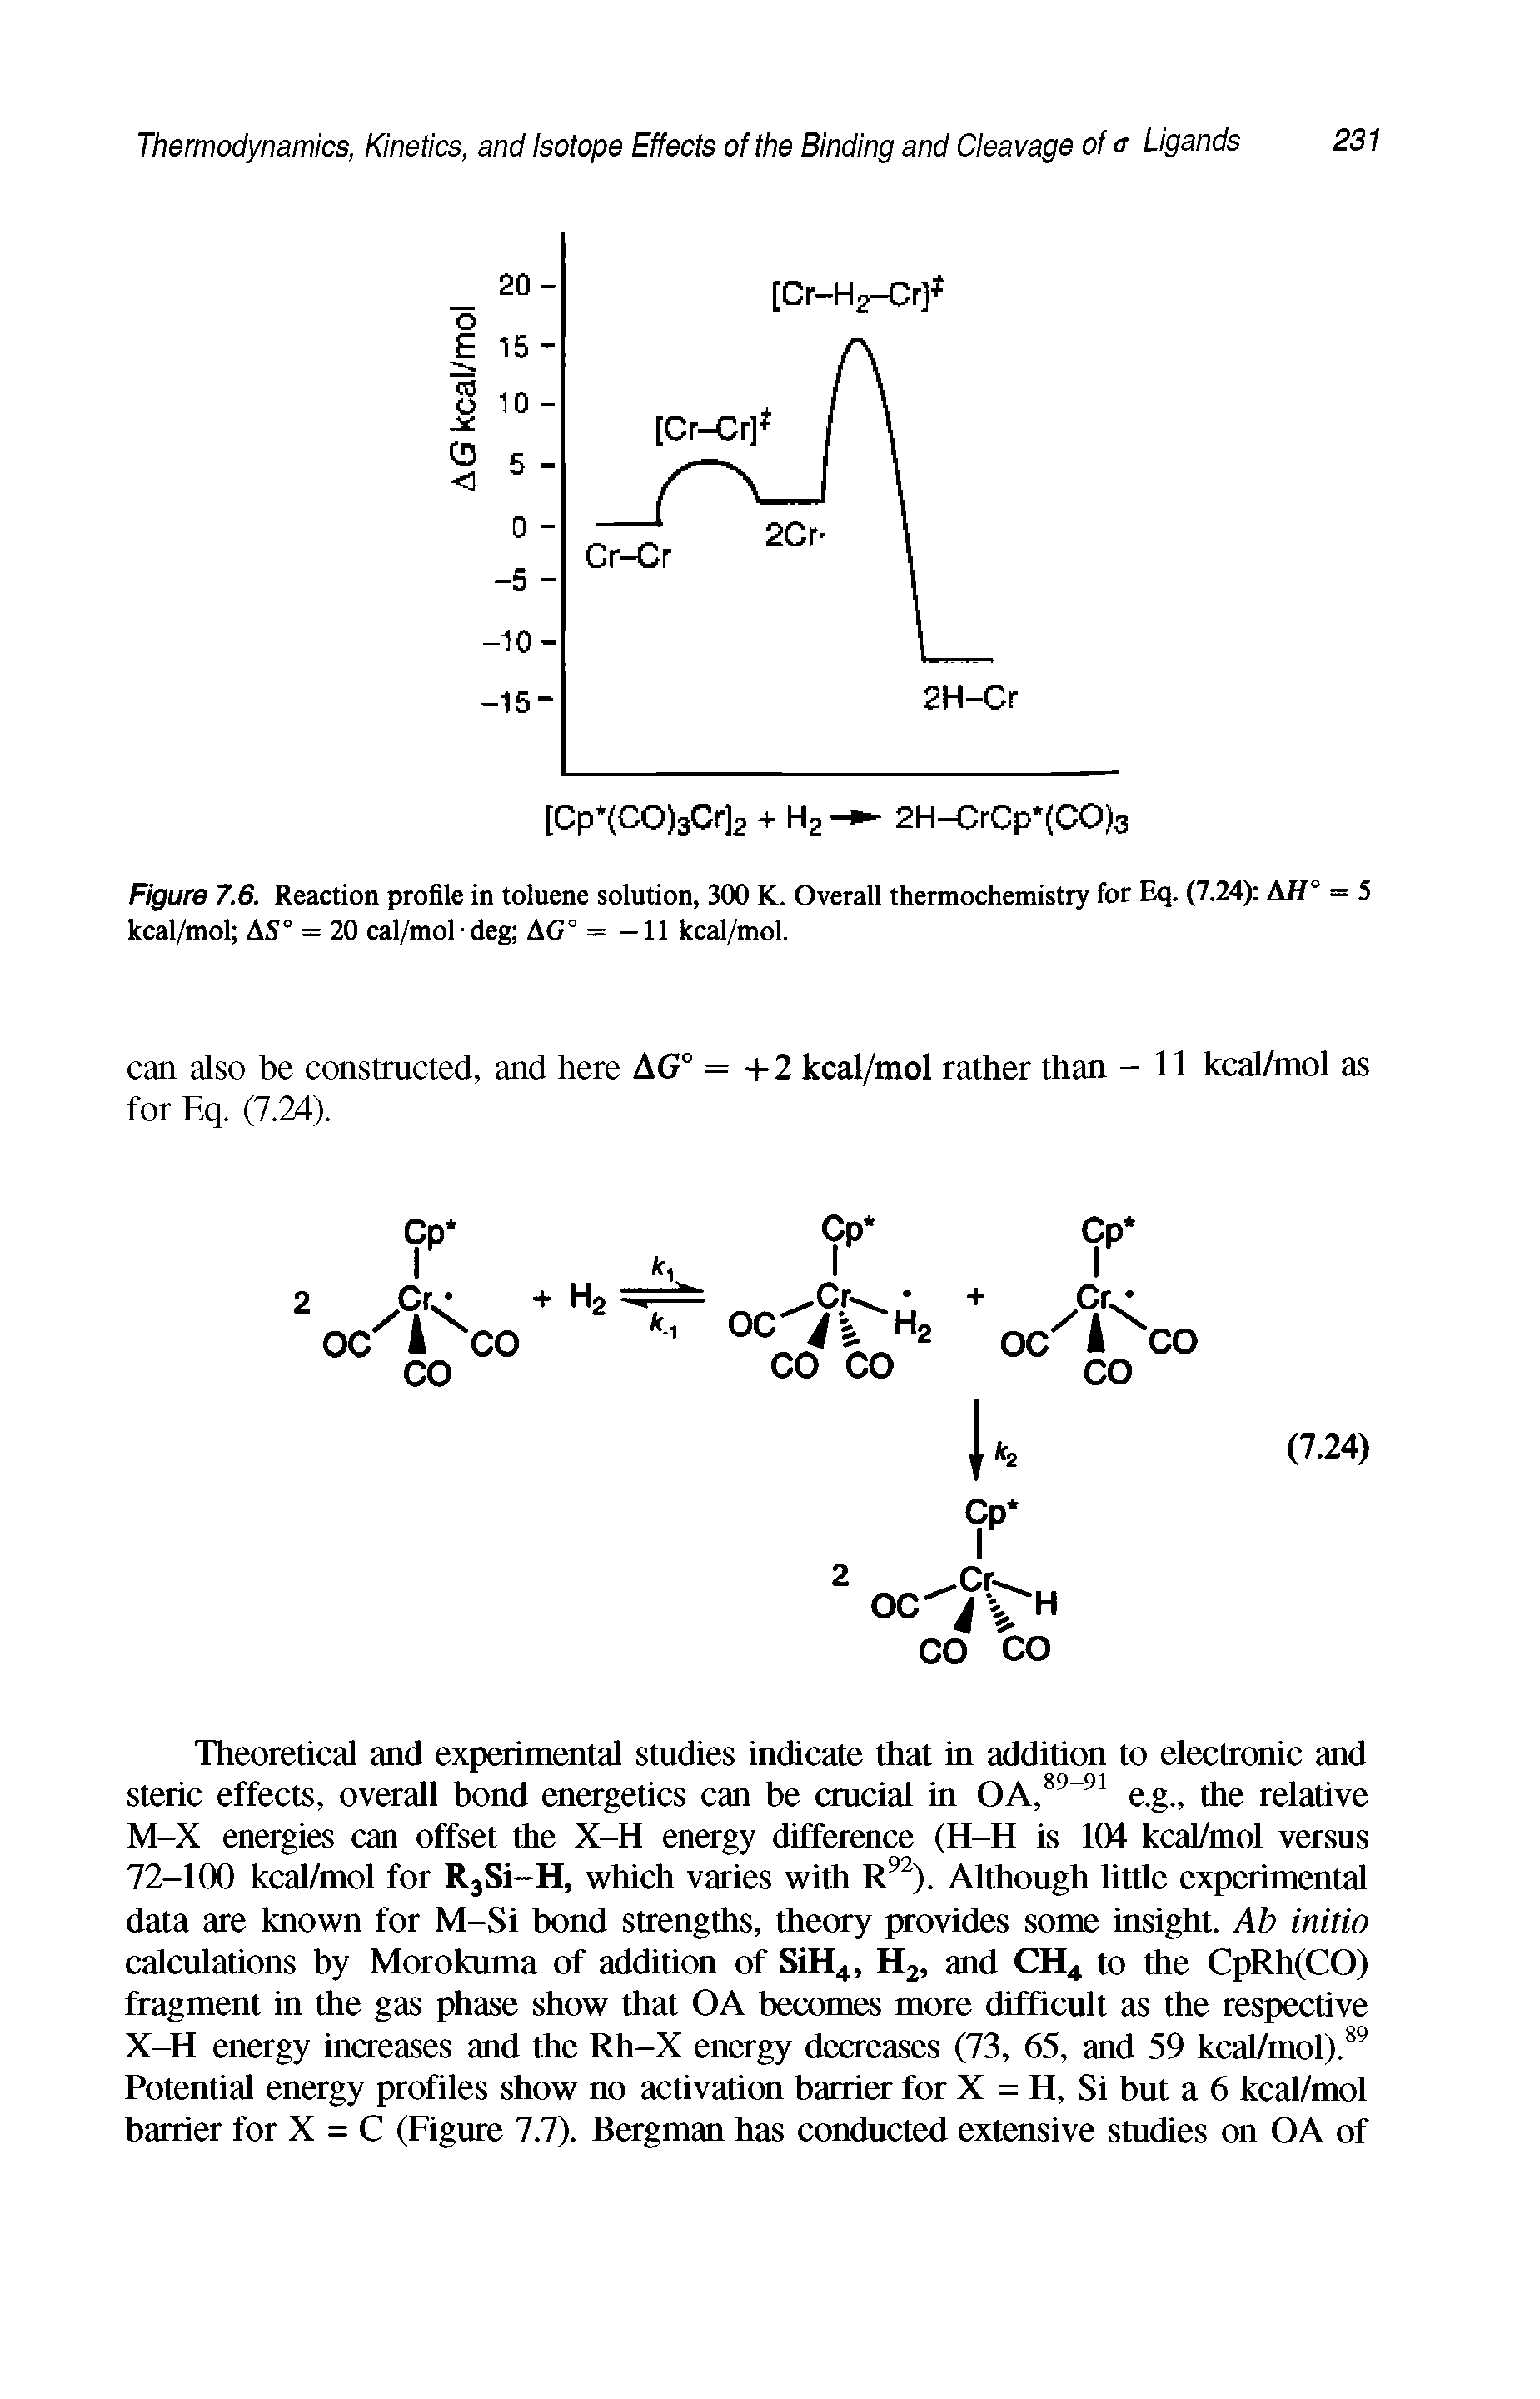 Figure 7.6. Reaction profile in toluene solution, 300 K. Overall thermochemistry for Eq. (7.24) AH° — 5 kcal/mol AS° = 20 cal/moldeg AG° = —11 kcal/mol.